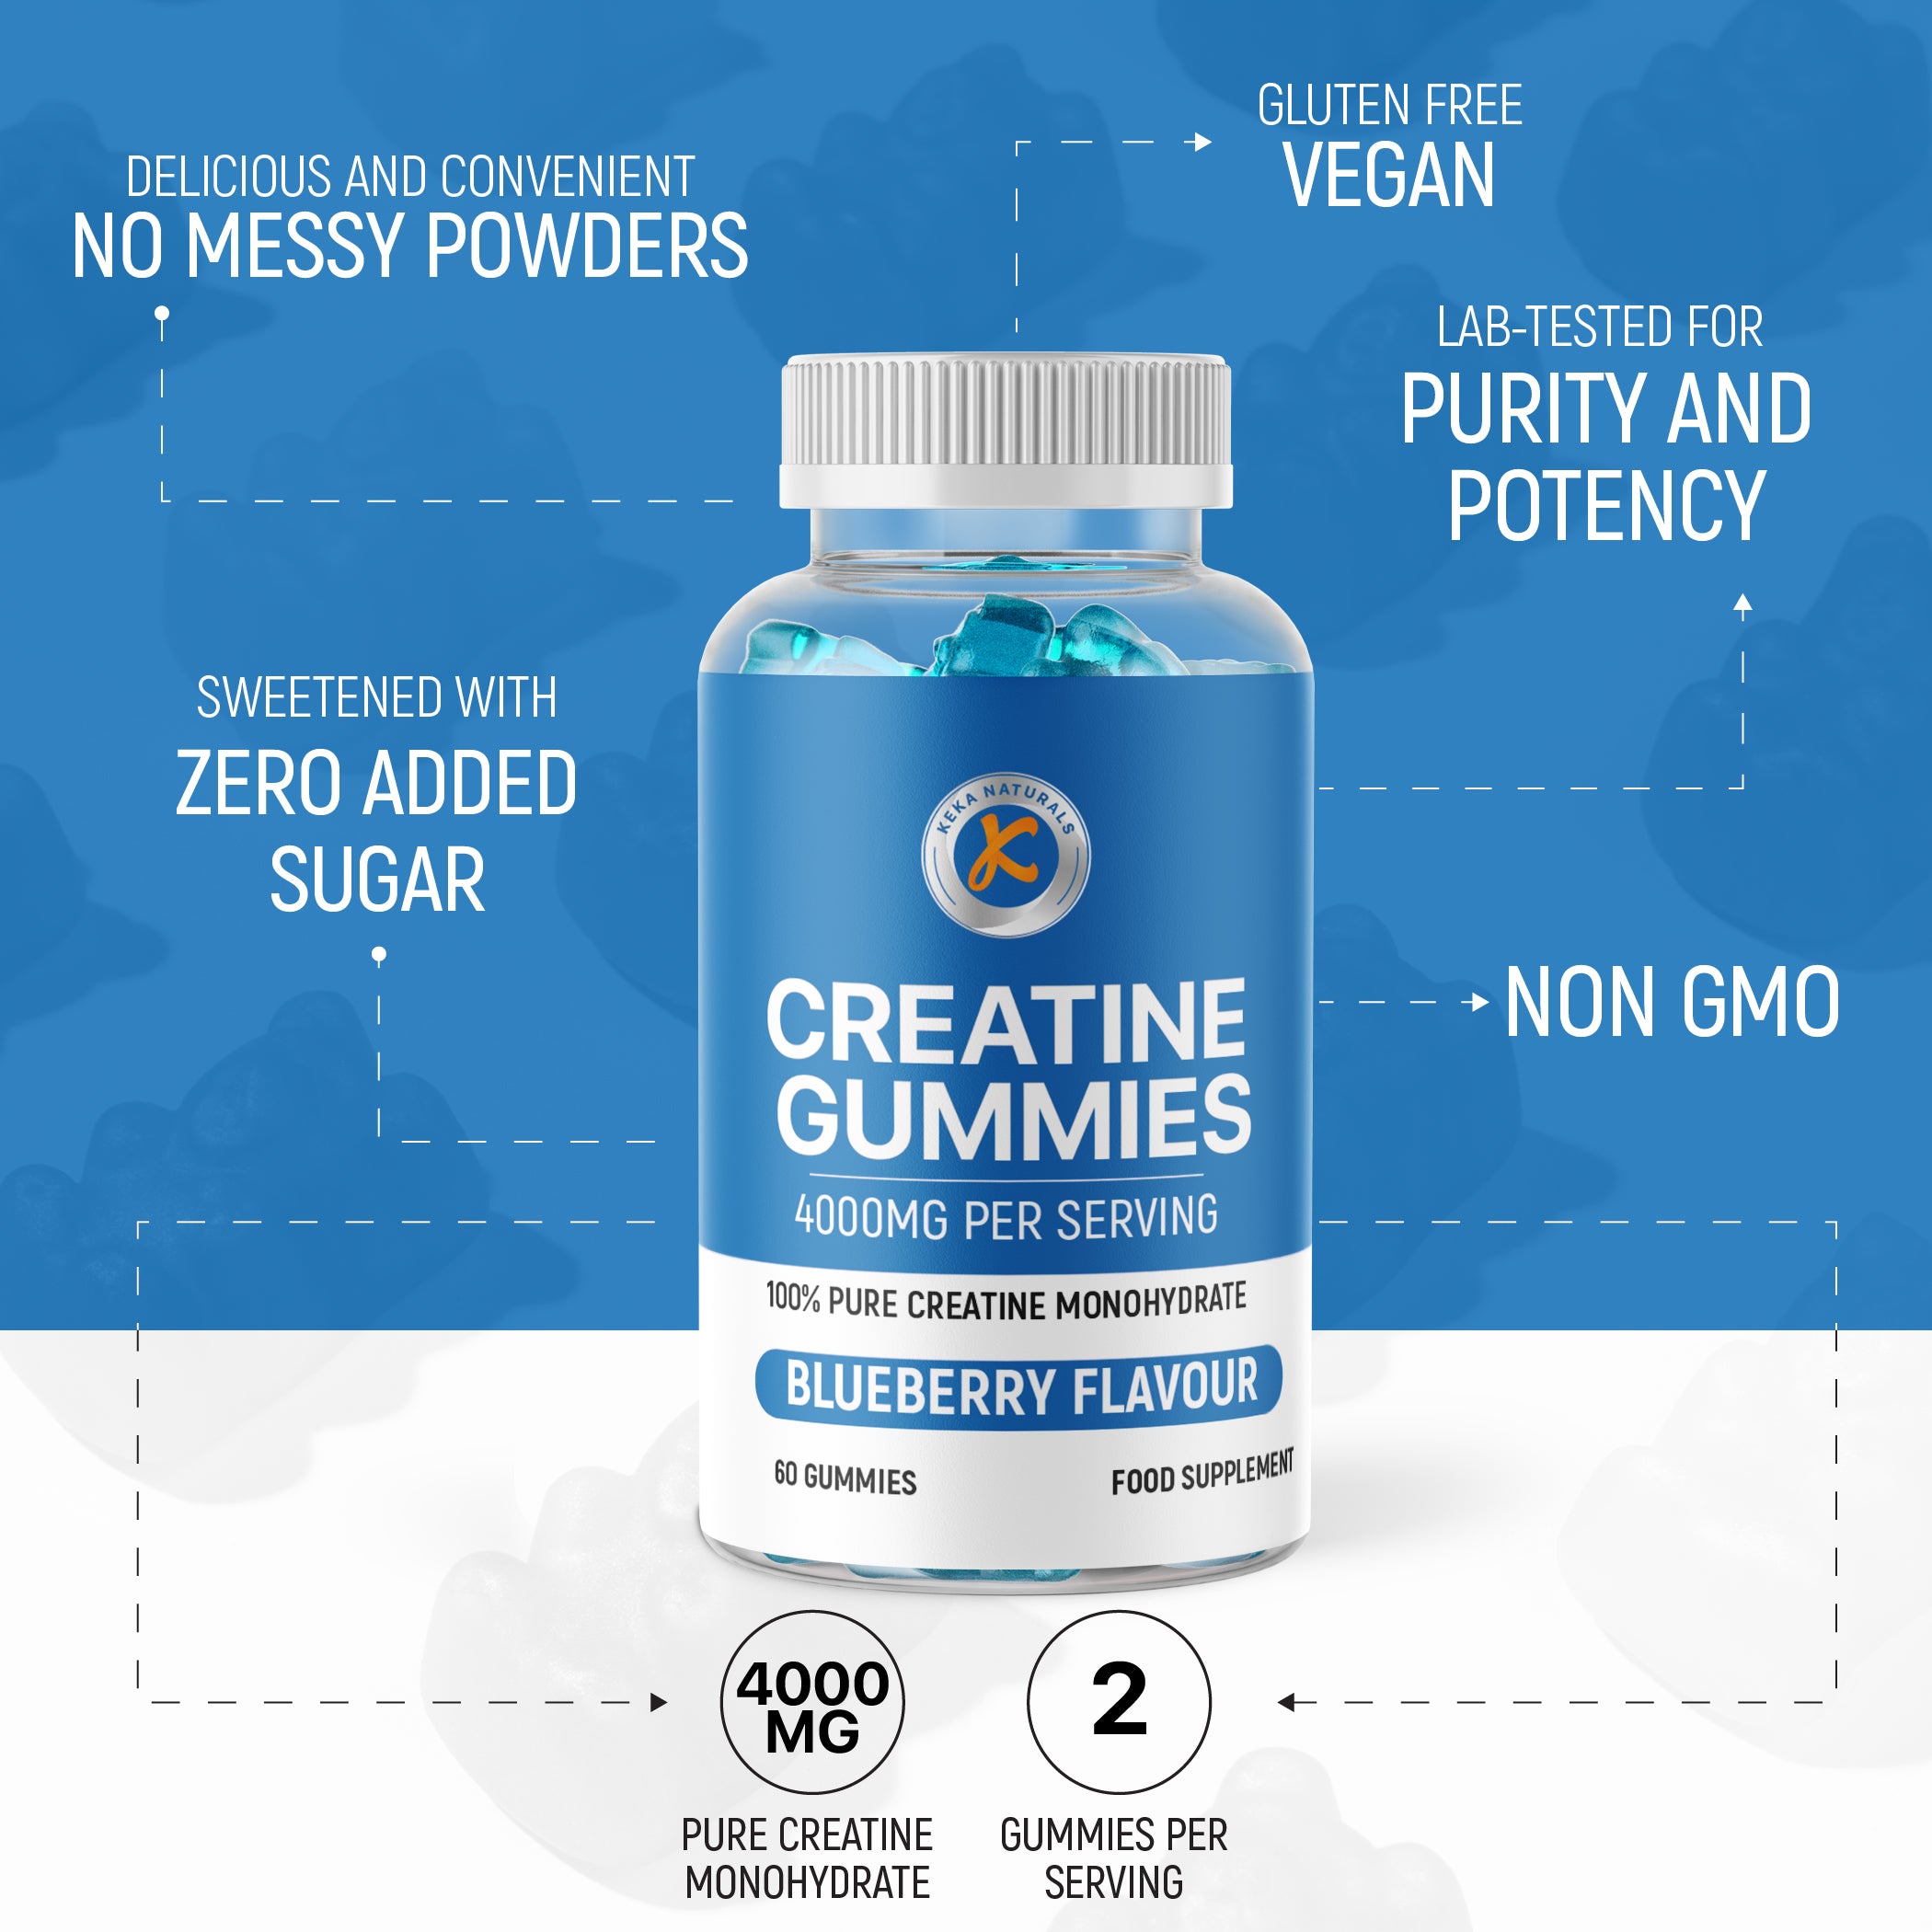 creatine gummies 4000mg per serving blueberry flavour benefits vegan and gluten free